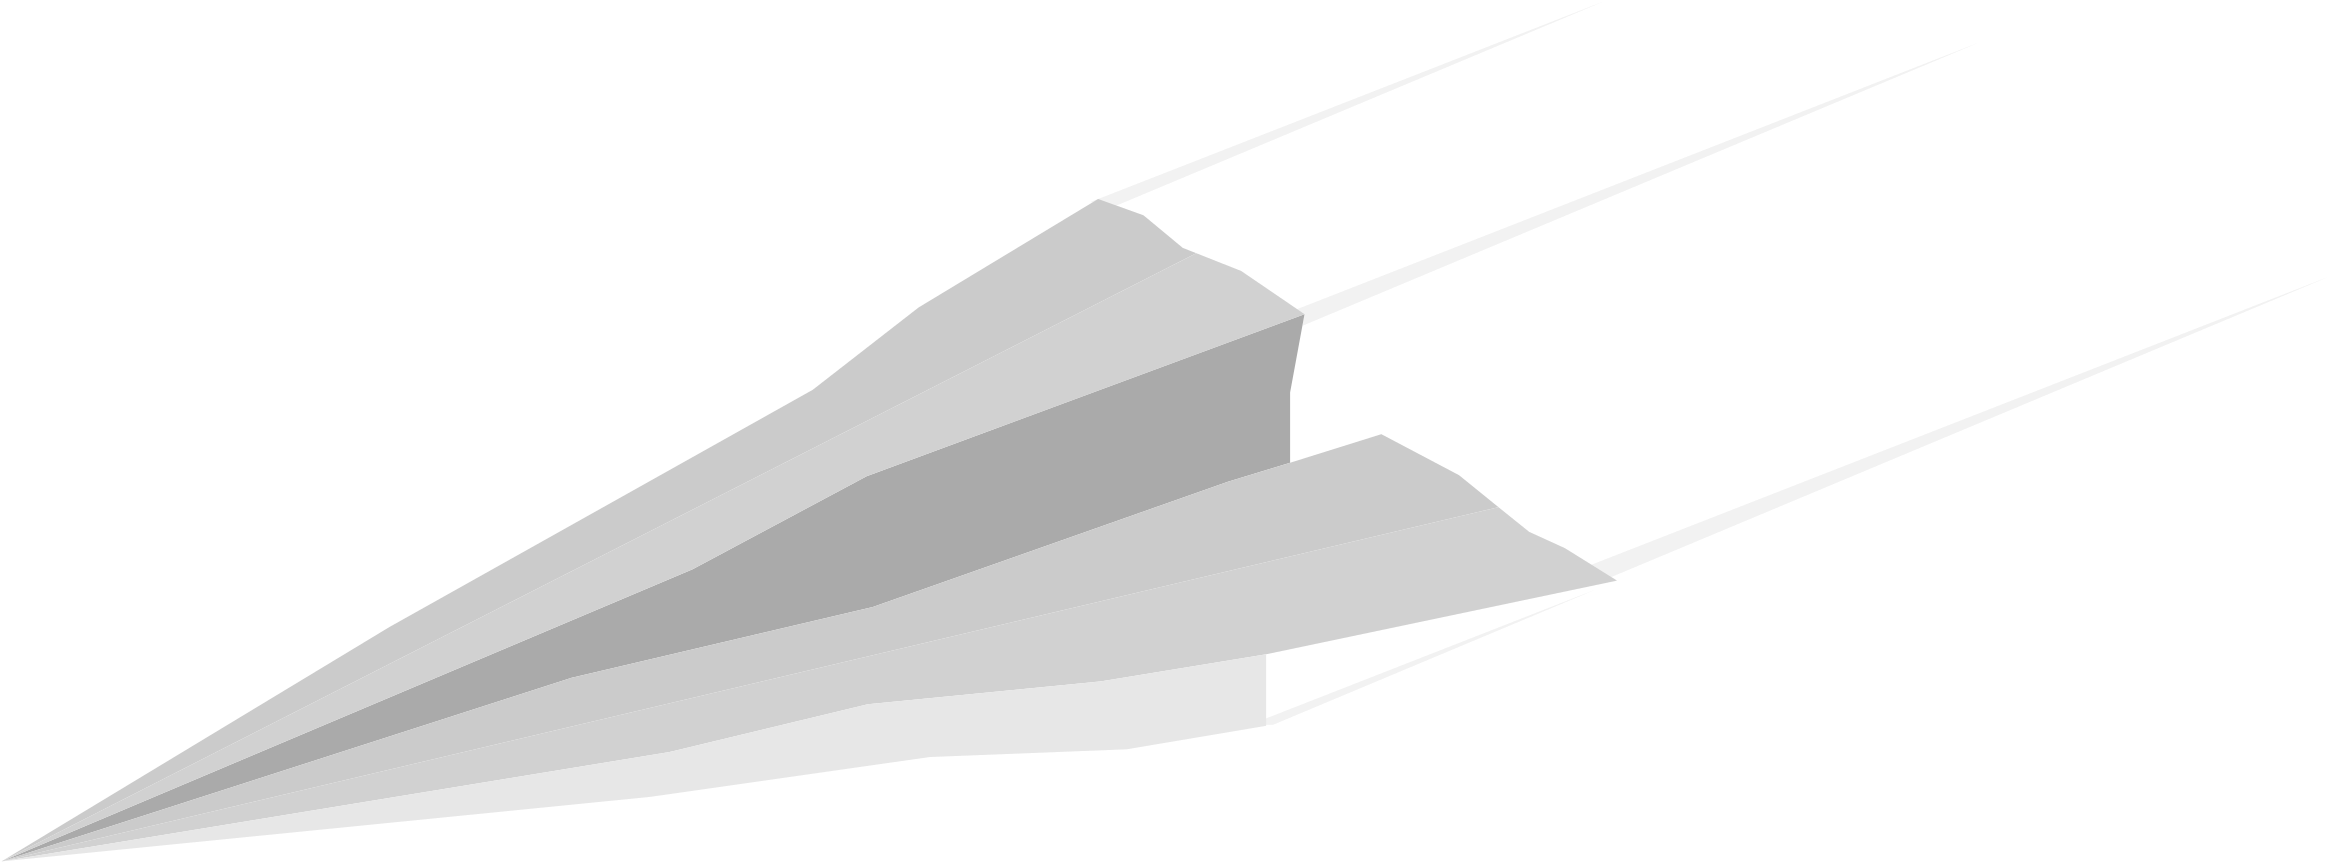 Big Image - Paper Plane (2400x2400)